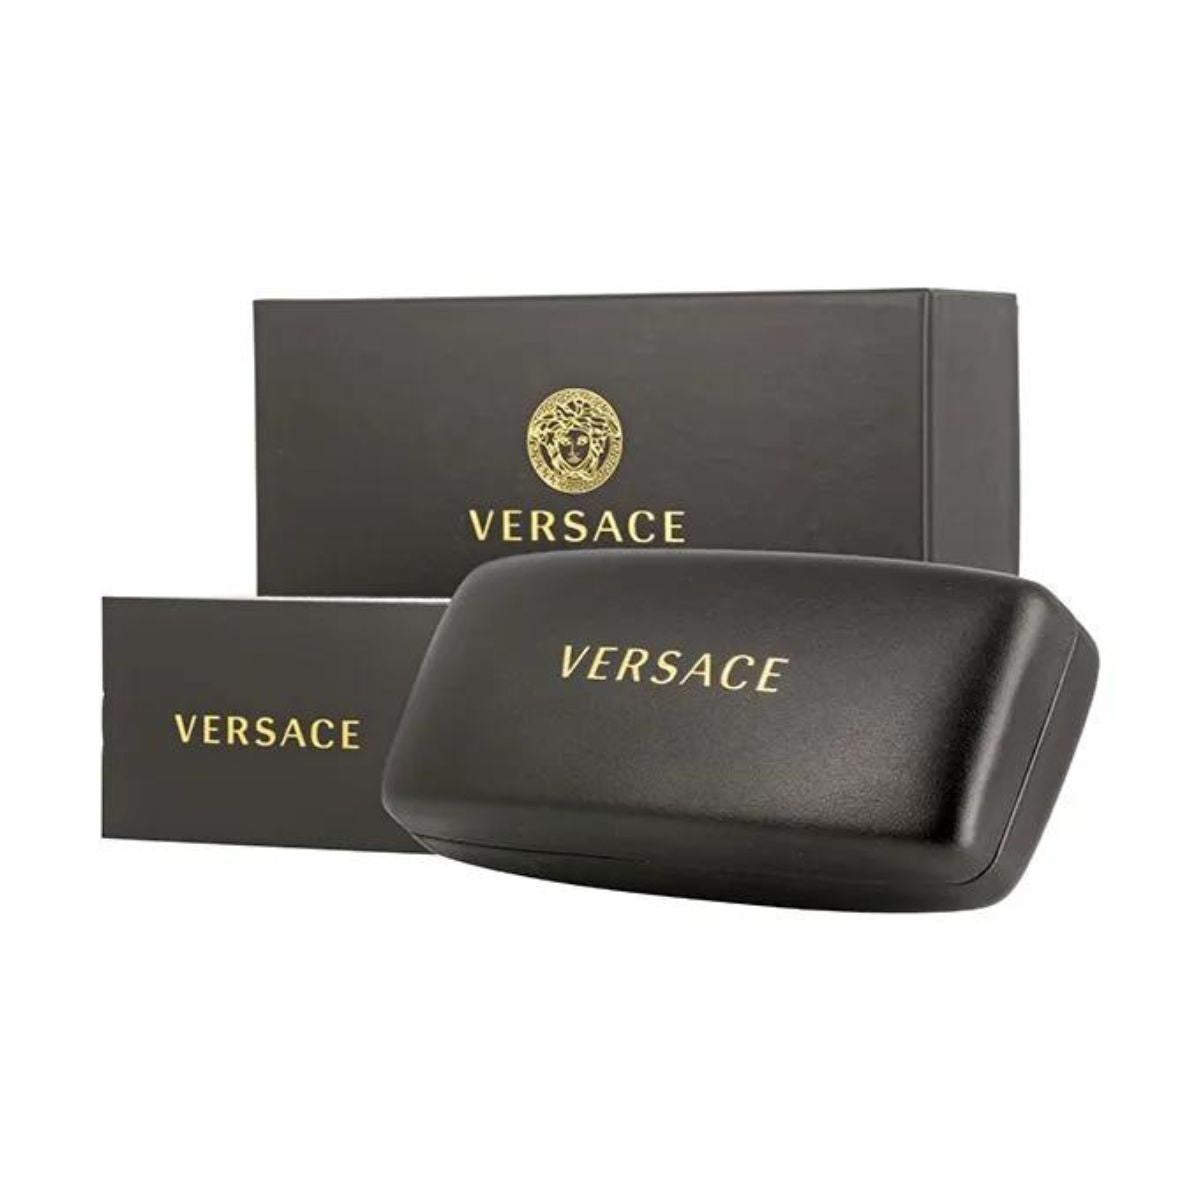 " Versace 4439 GB1/87UV Potected Square Sunglasses For Men And Women At Optorium"